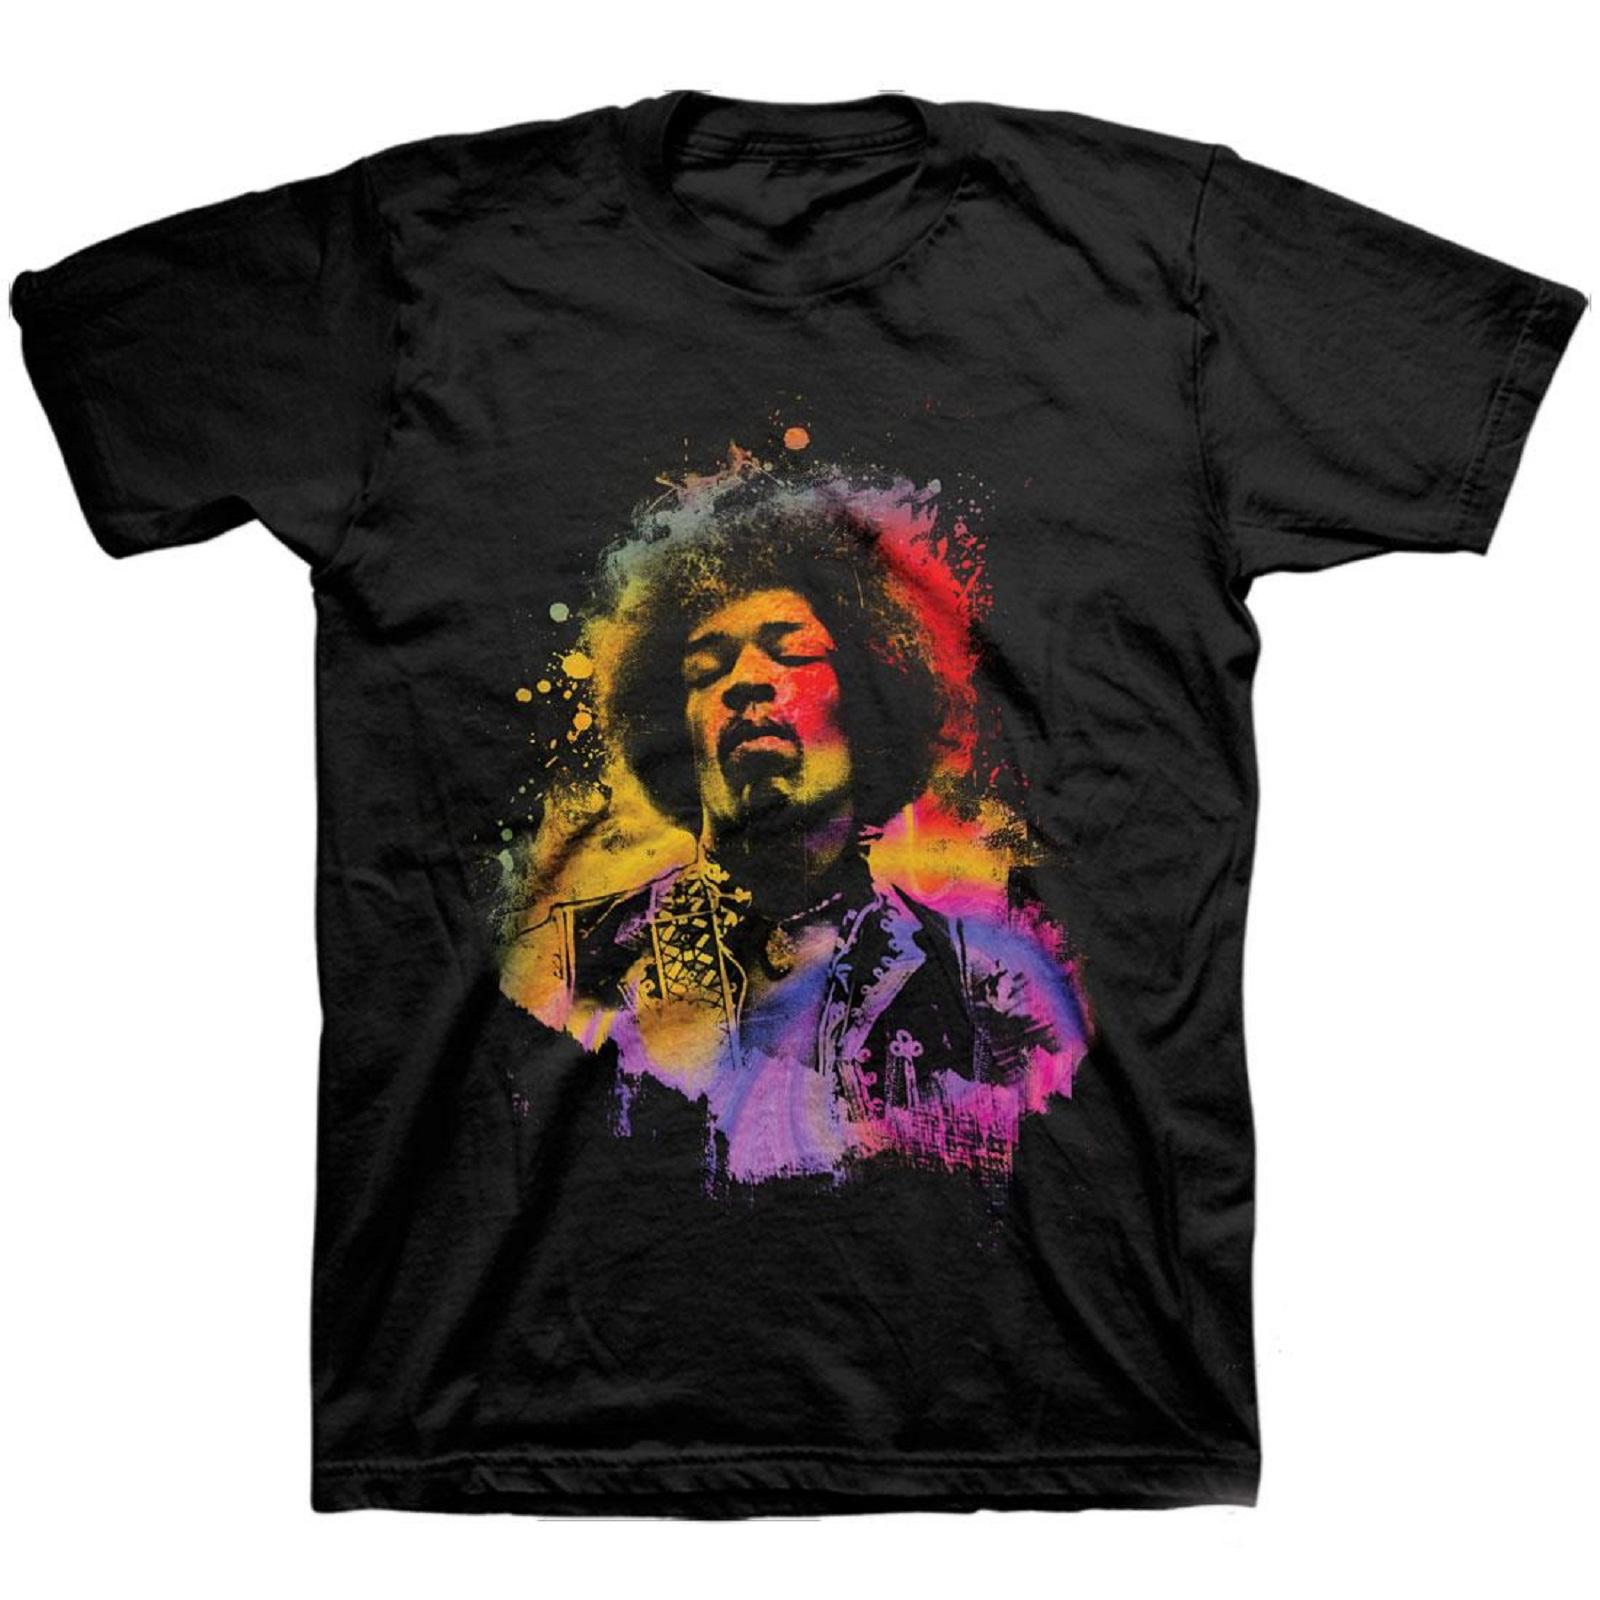 Bravado Men's Graphic T-Shirt - Jimi Hendrix